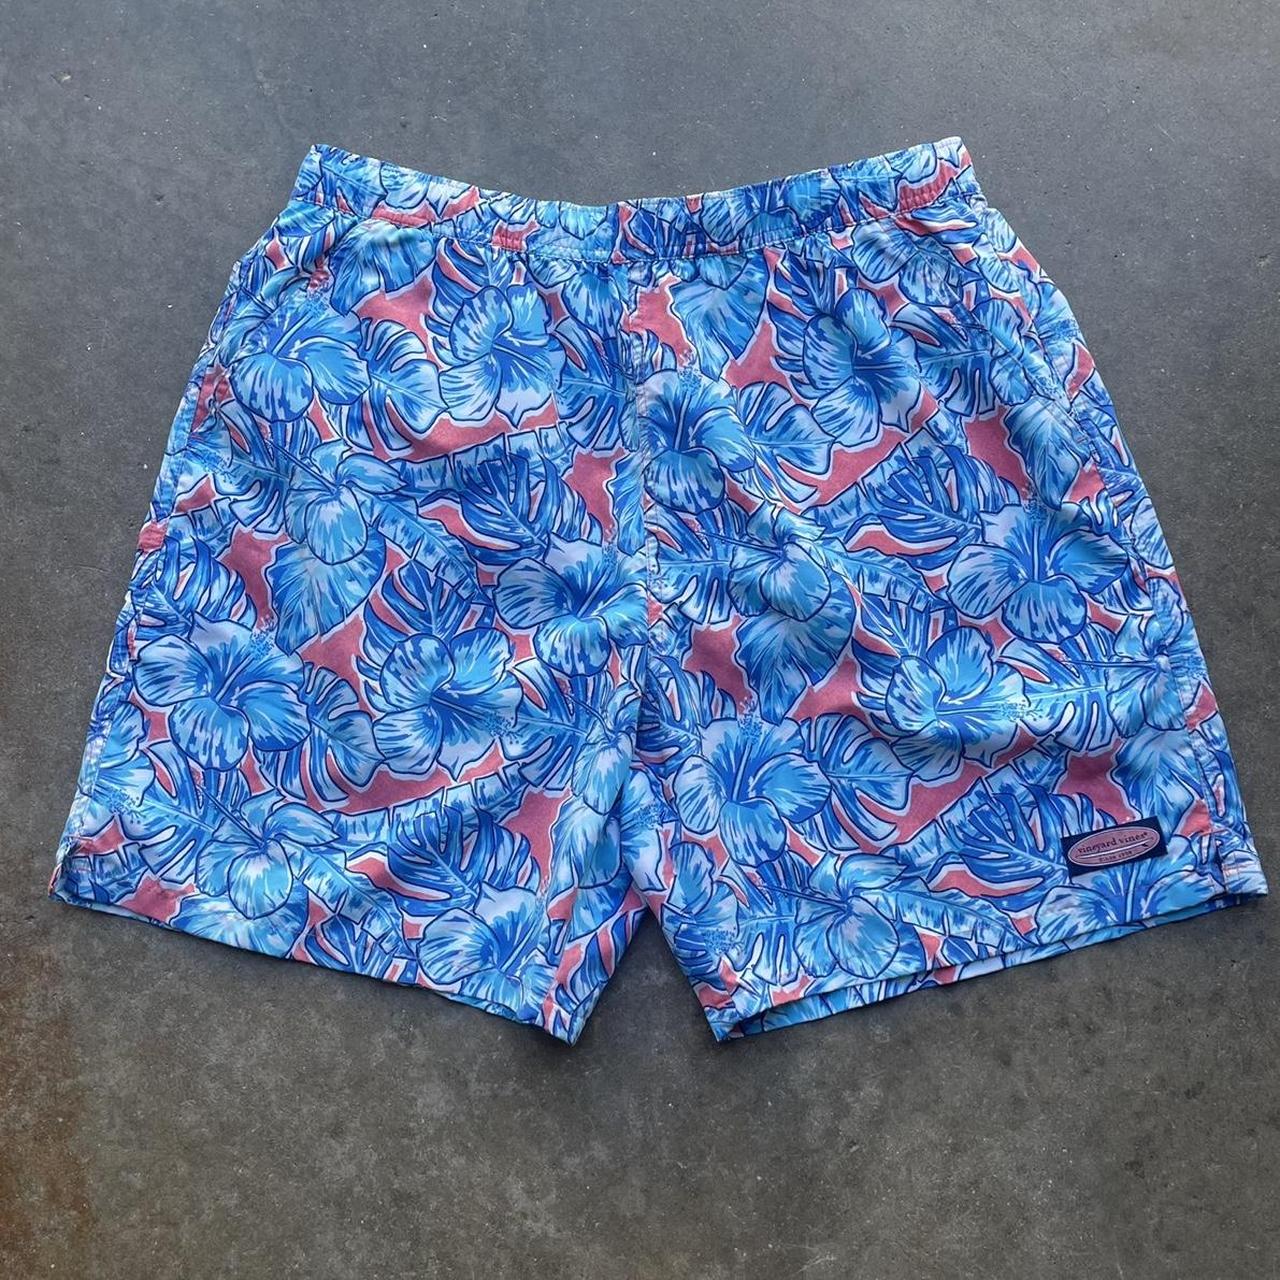 Vineyard Vines Men's Blue and Pink Swim-briefs-shorts | Depop